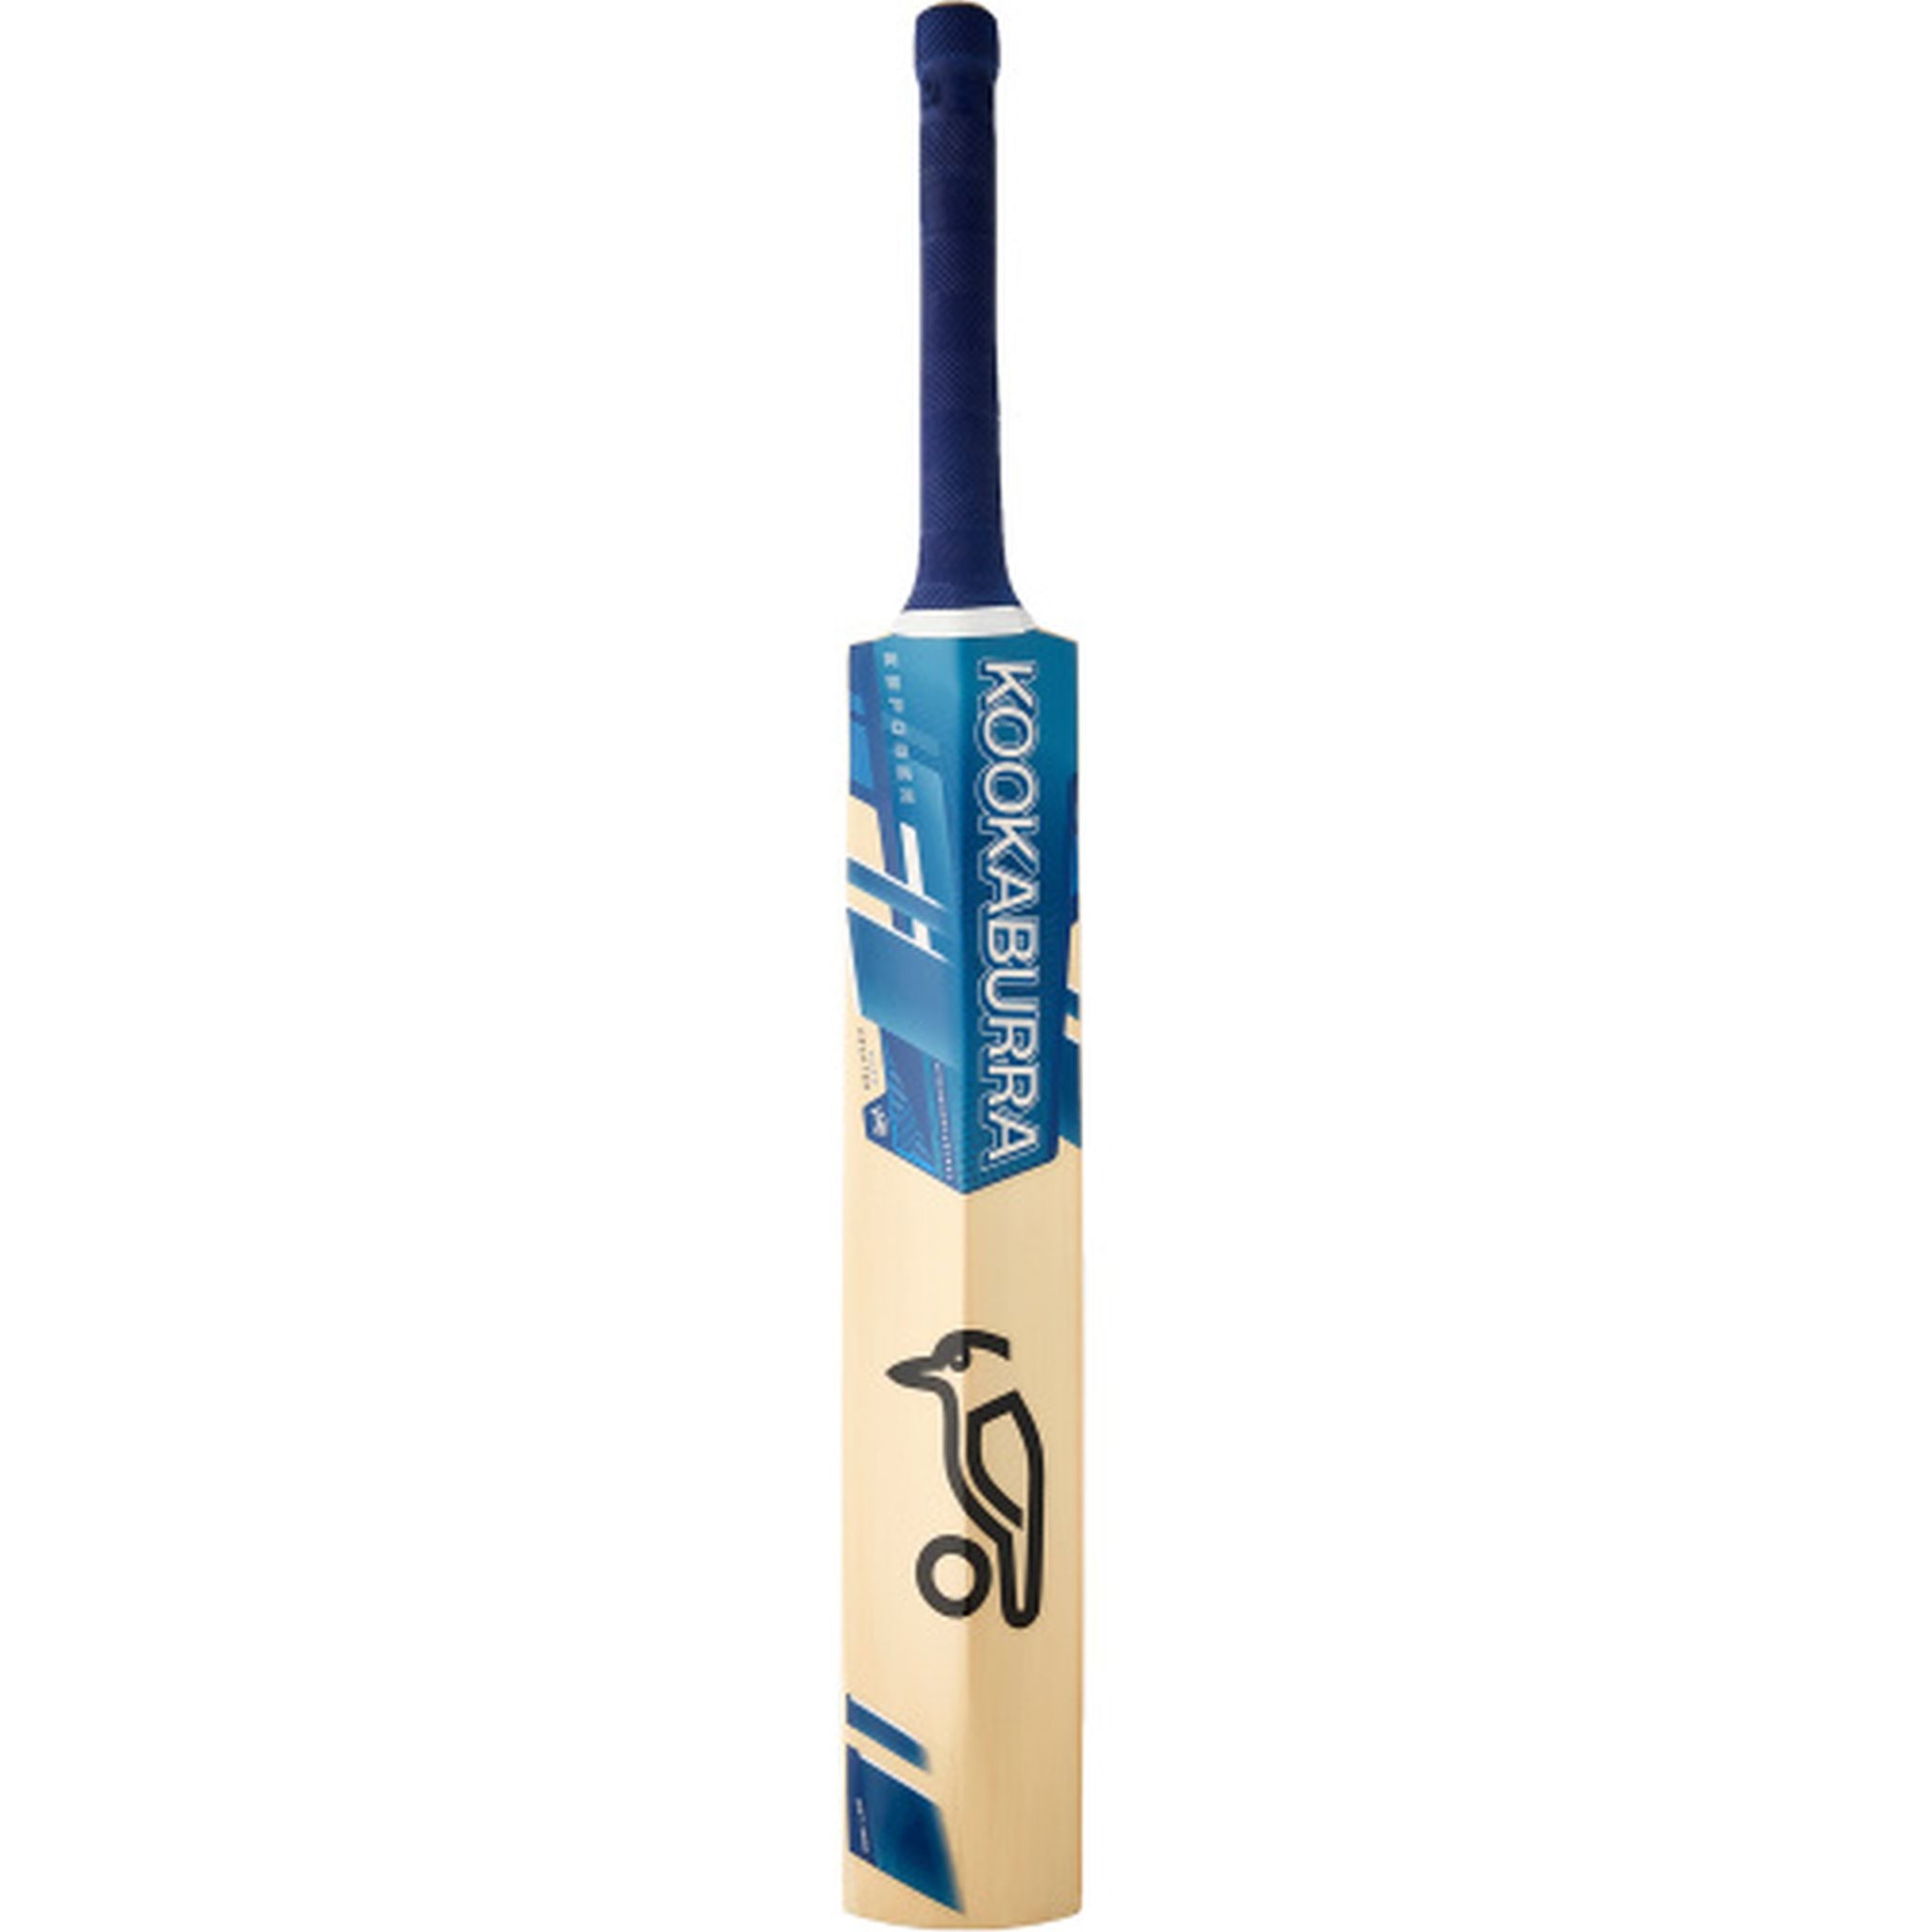 Kookaburra Empower Pro 9.0 Junior Cricket Bat